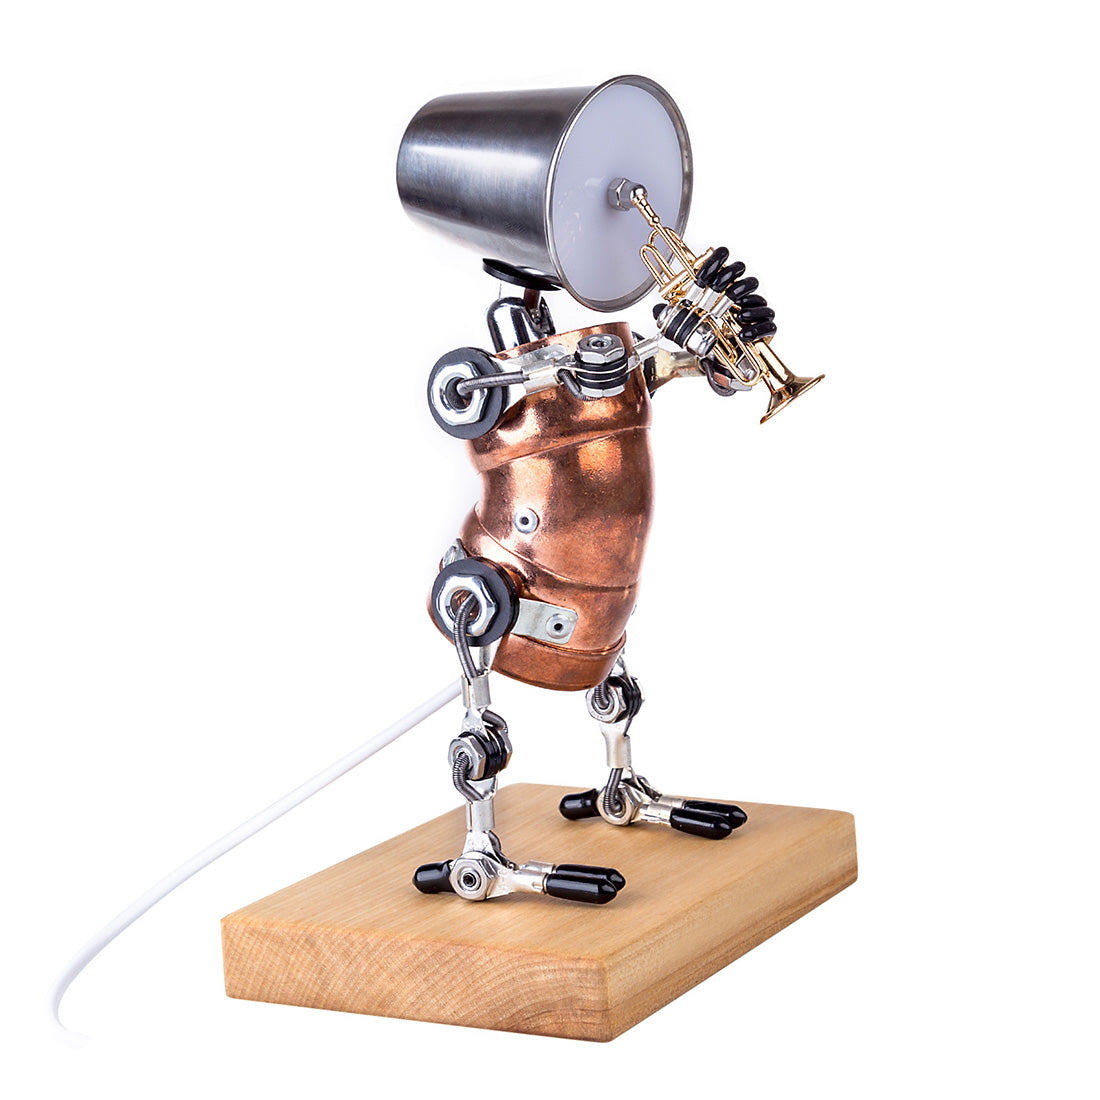 3D Steampunk Metal Band Musician Trumpet Saxophone Robot Table Lamp Crafts